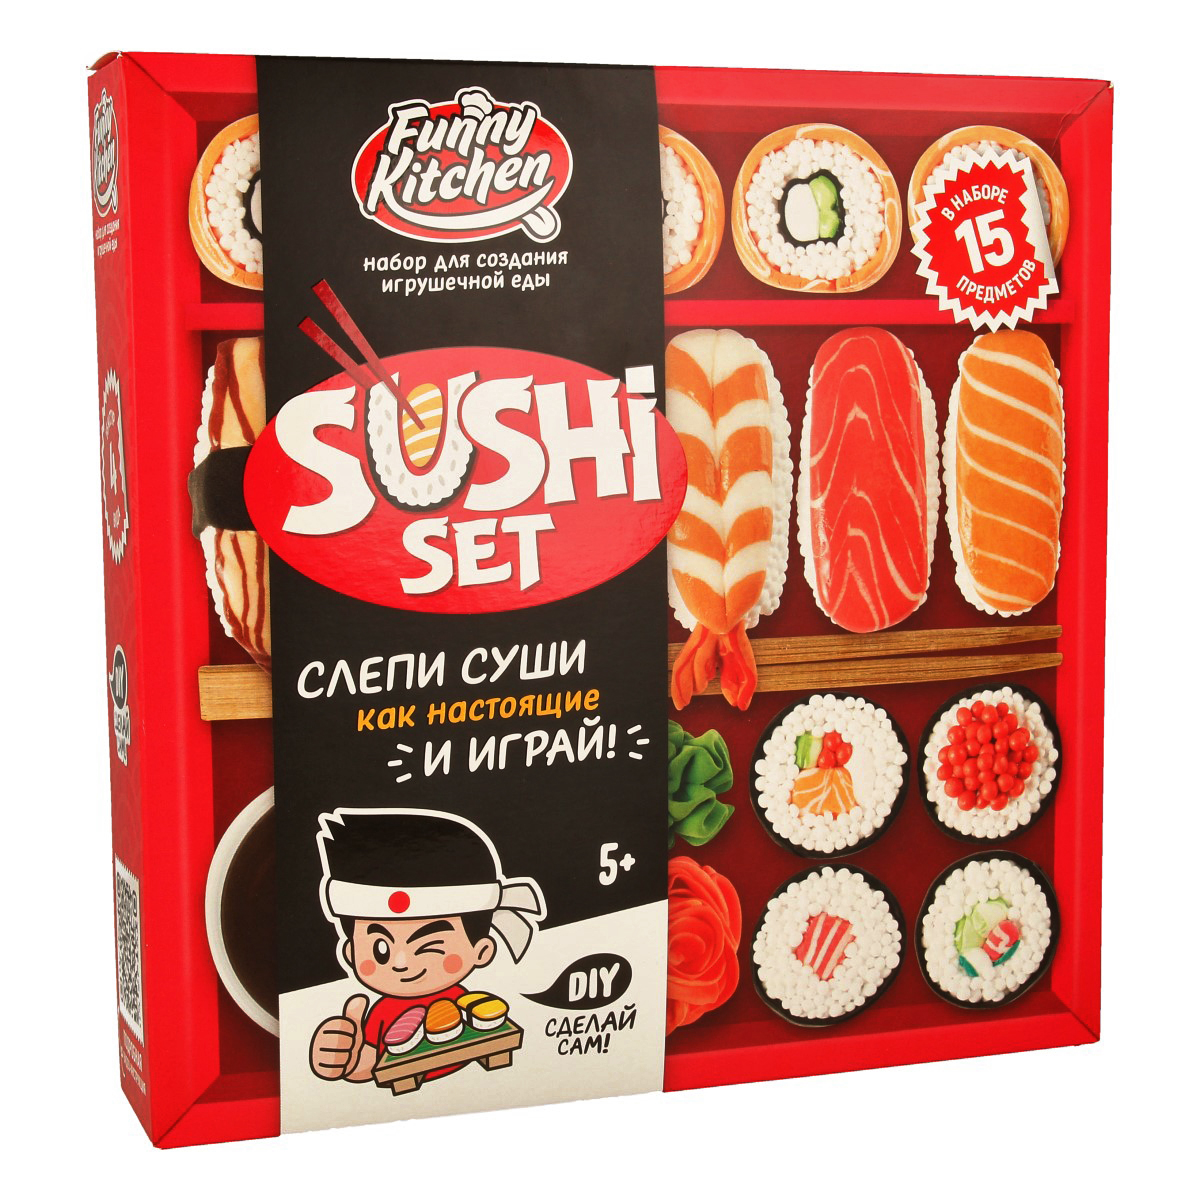 Набор для опытов Funny Kitchen "Sushi set" 150 гр легкий пластилин, слайм, тесто